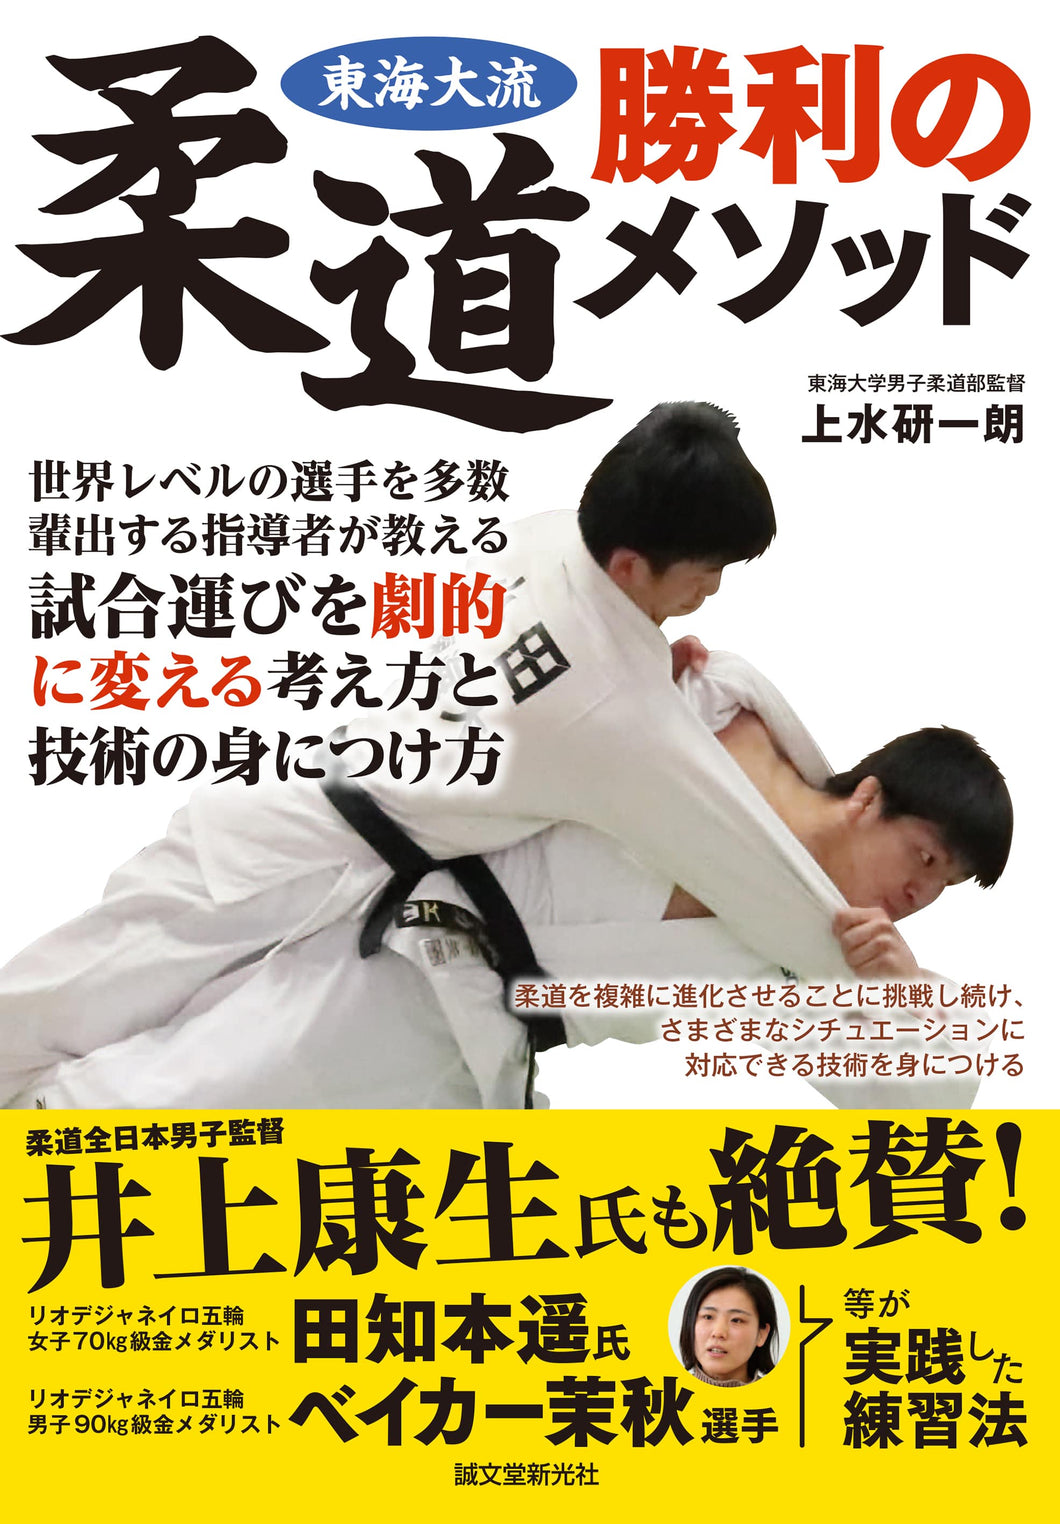 Tokai Dairyu Judo Victory Method